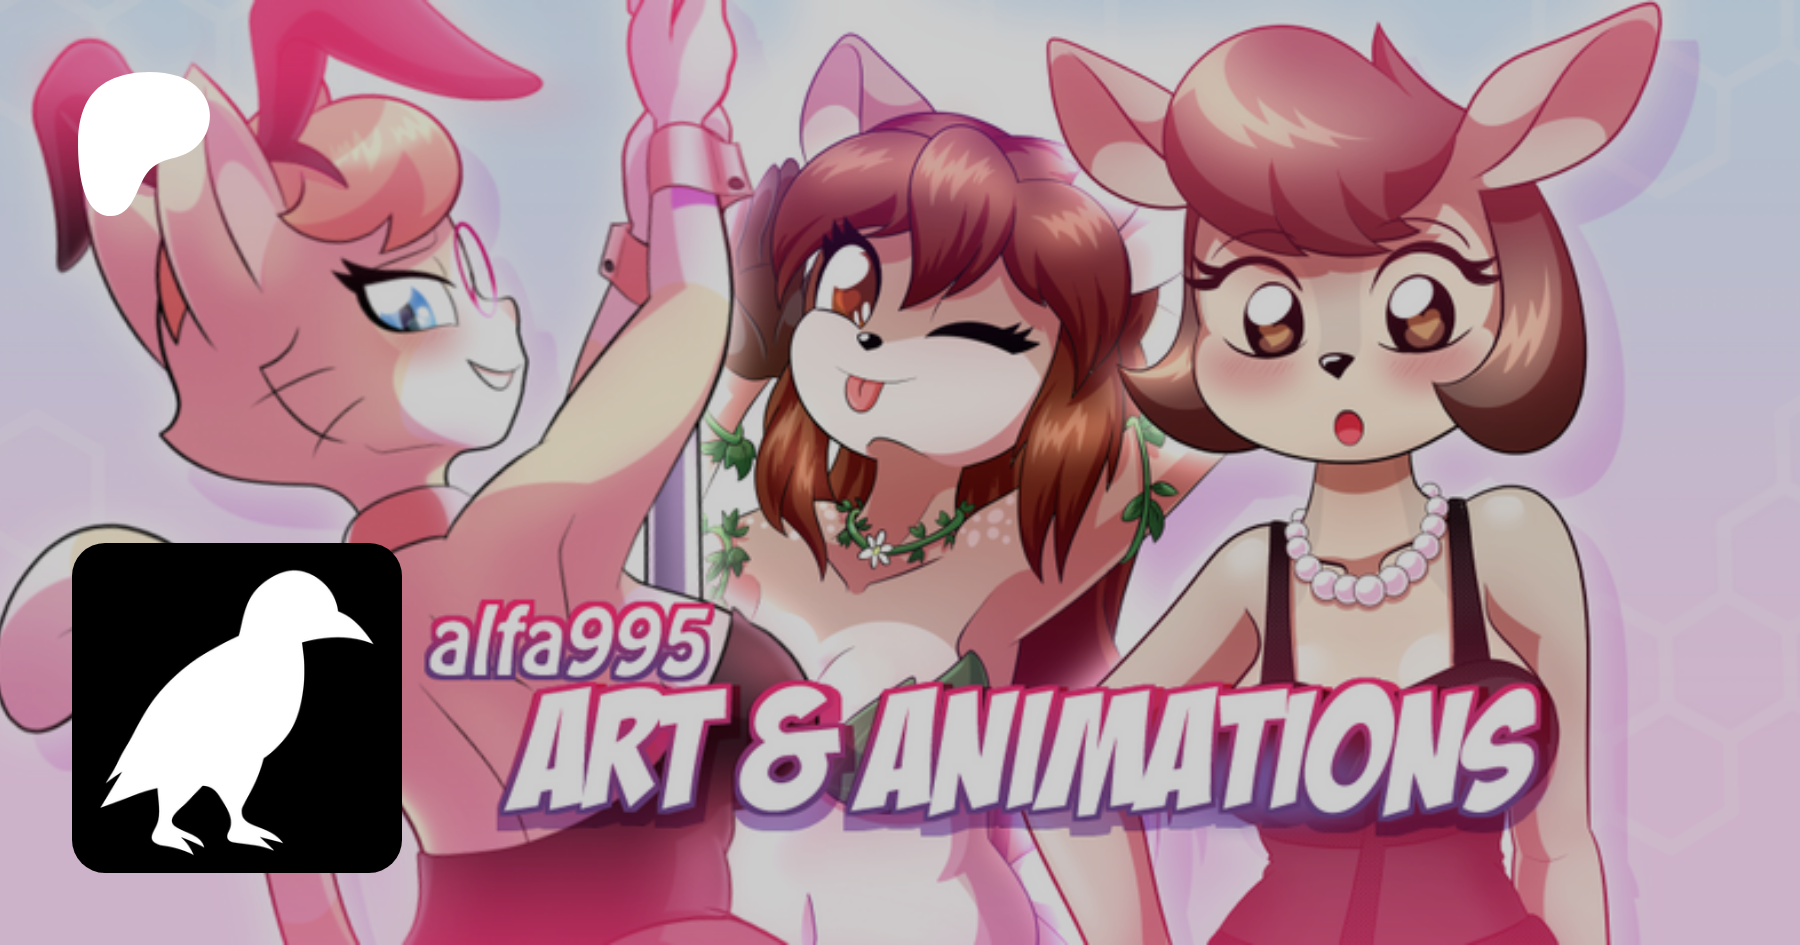 alfa995 | Creating Art and Animations | Patreon